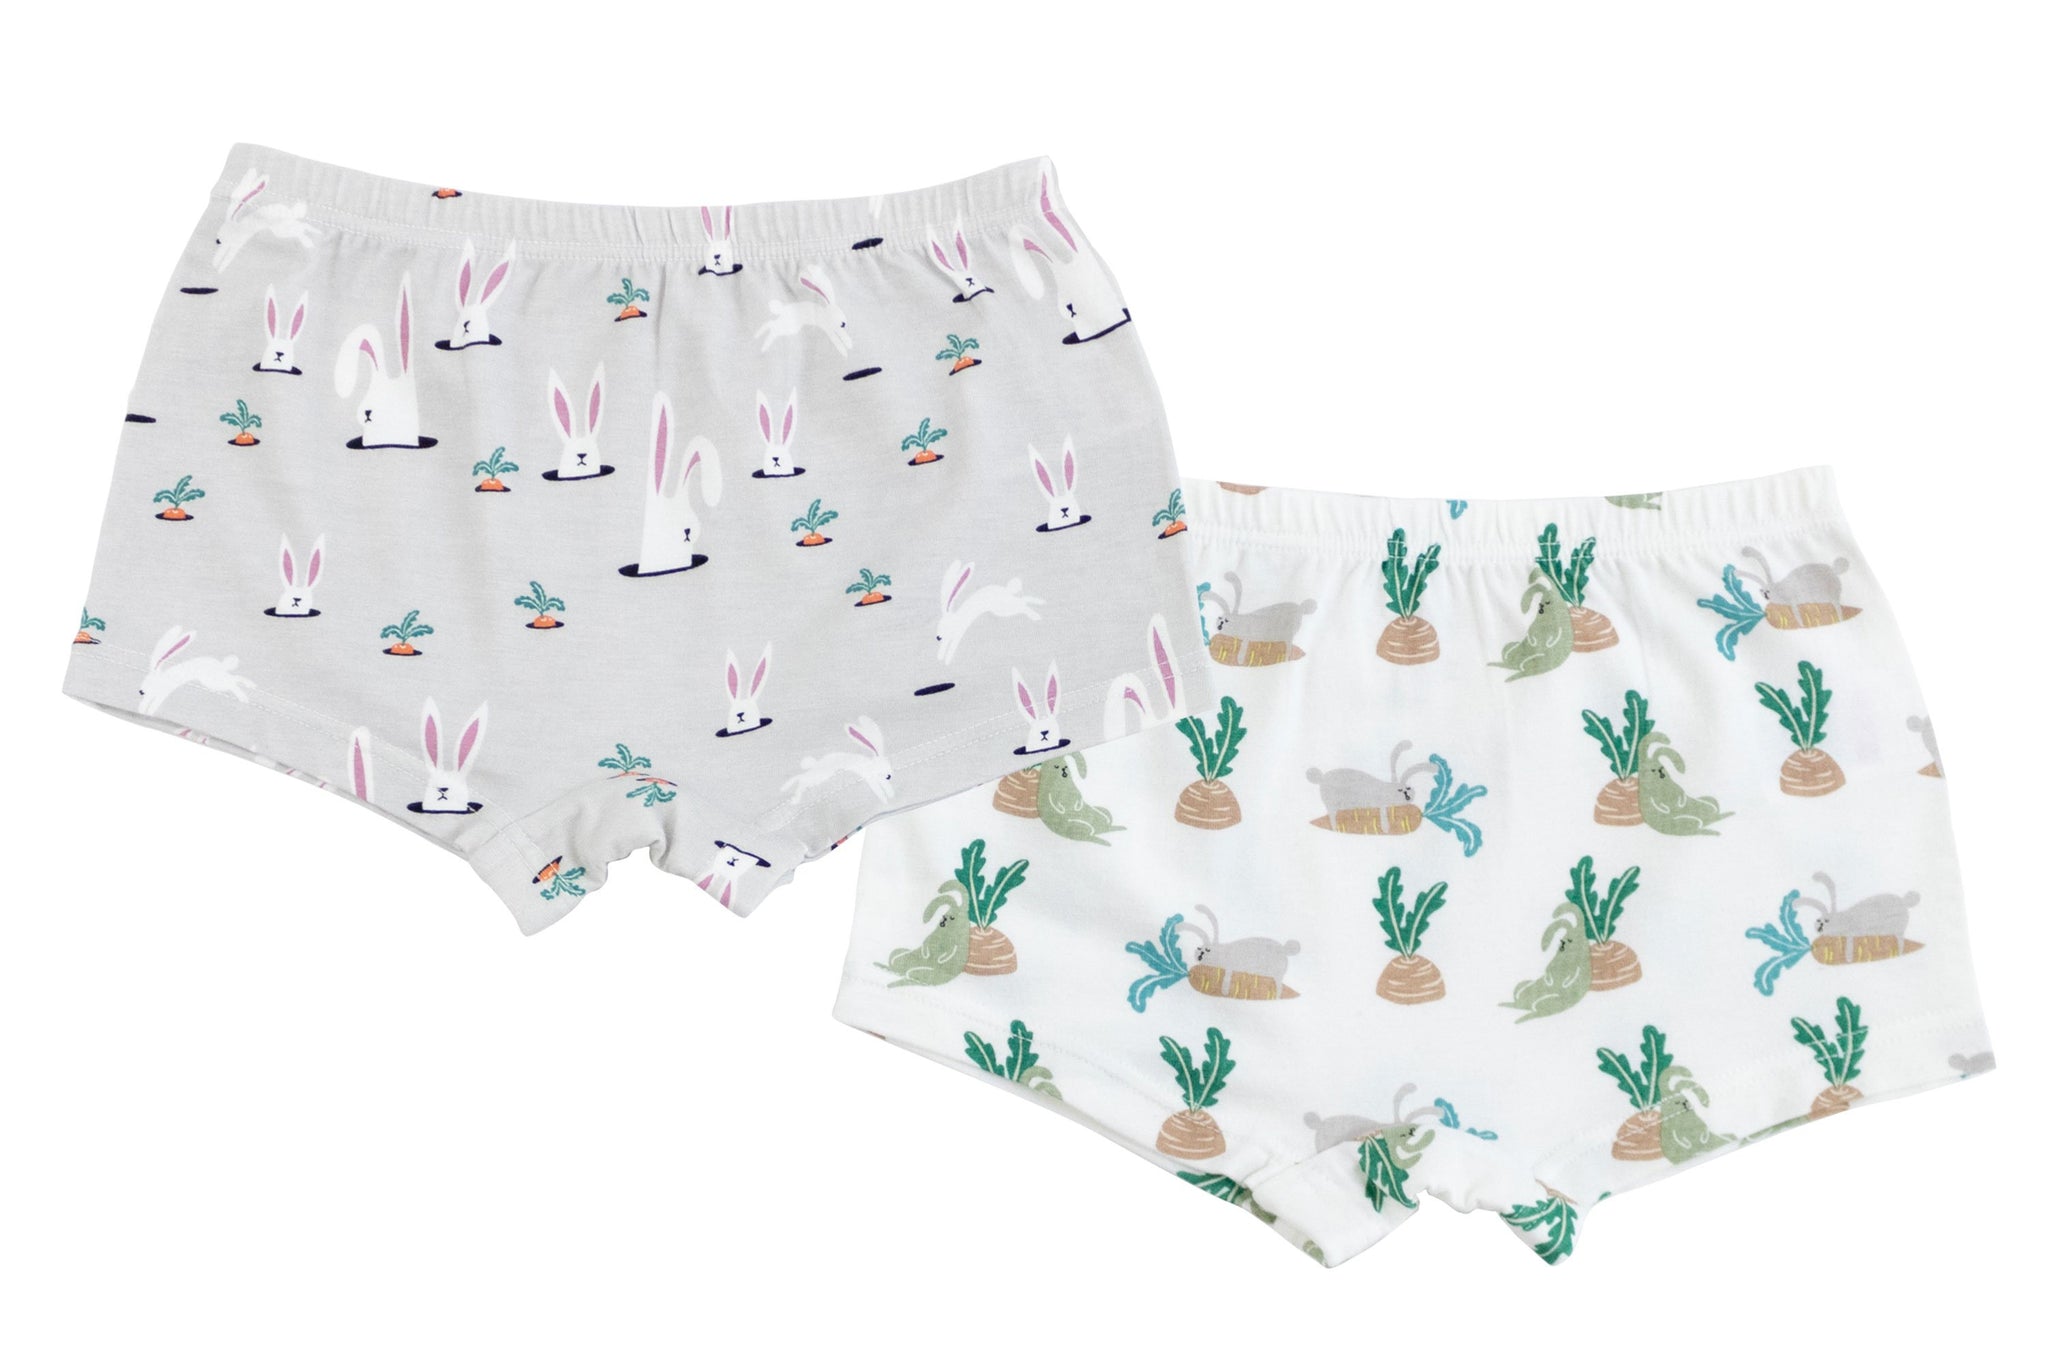 Bamboo Girls Boy Short Underwear（2 Pack）- Rabbit